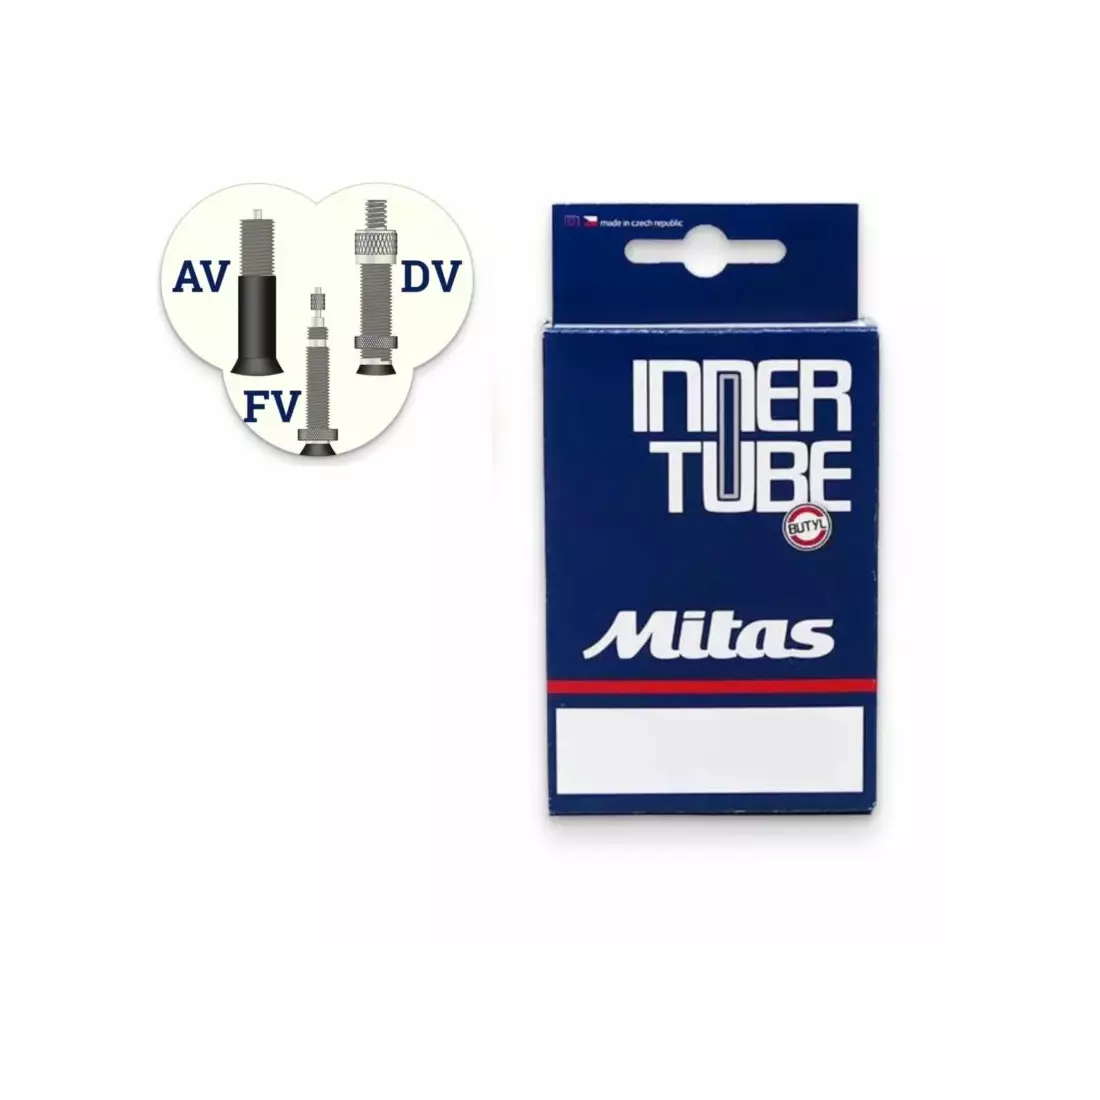 MITAS inner tube DV35 18x1,25-1.75 (32/47-355) 18DV35